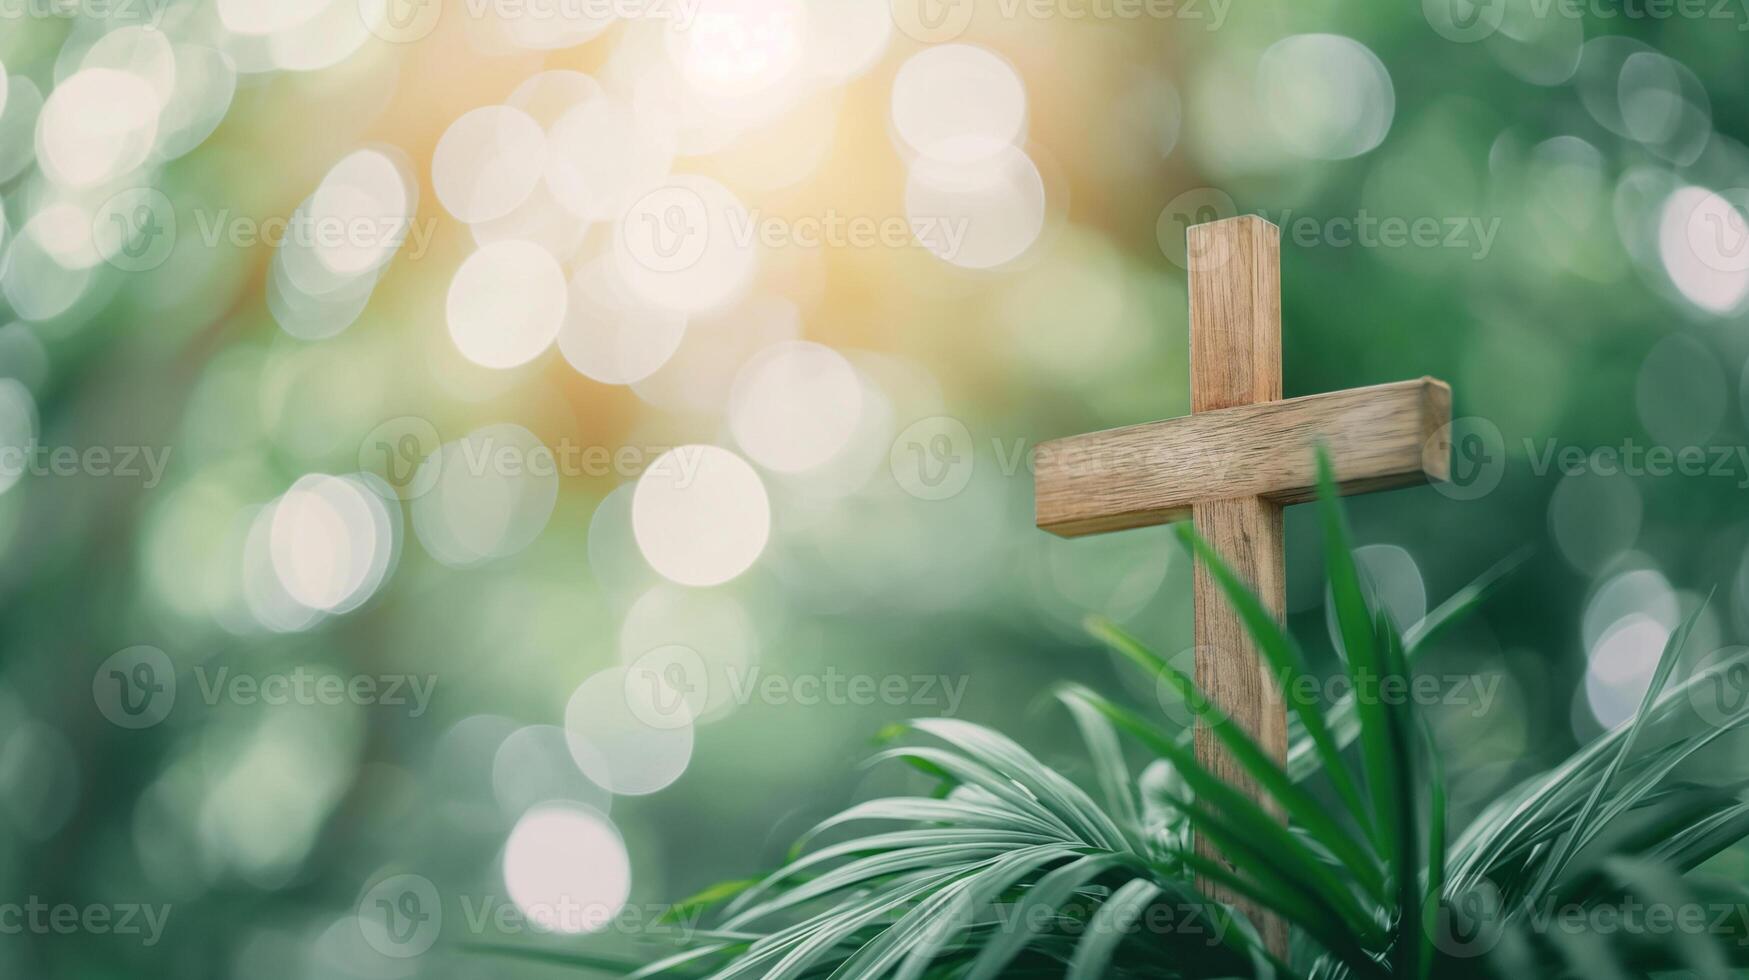 ai gegenereerd palm zondag houten kruis met zonovergoten bokeh achtergrond foto